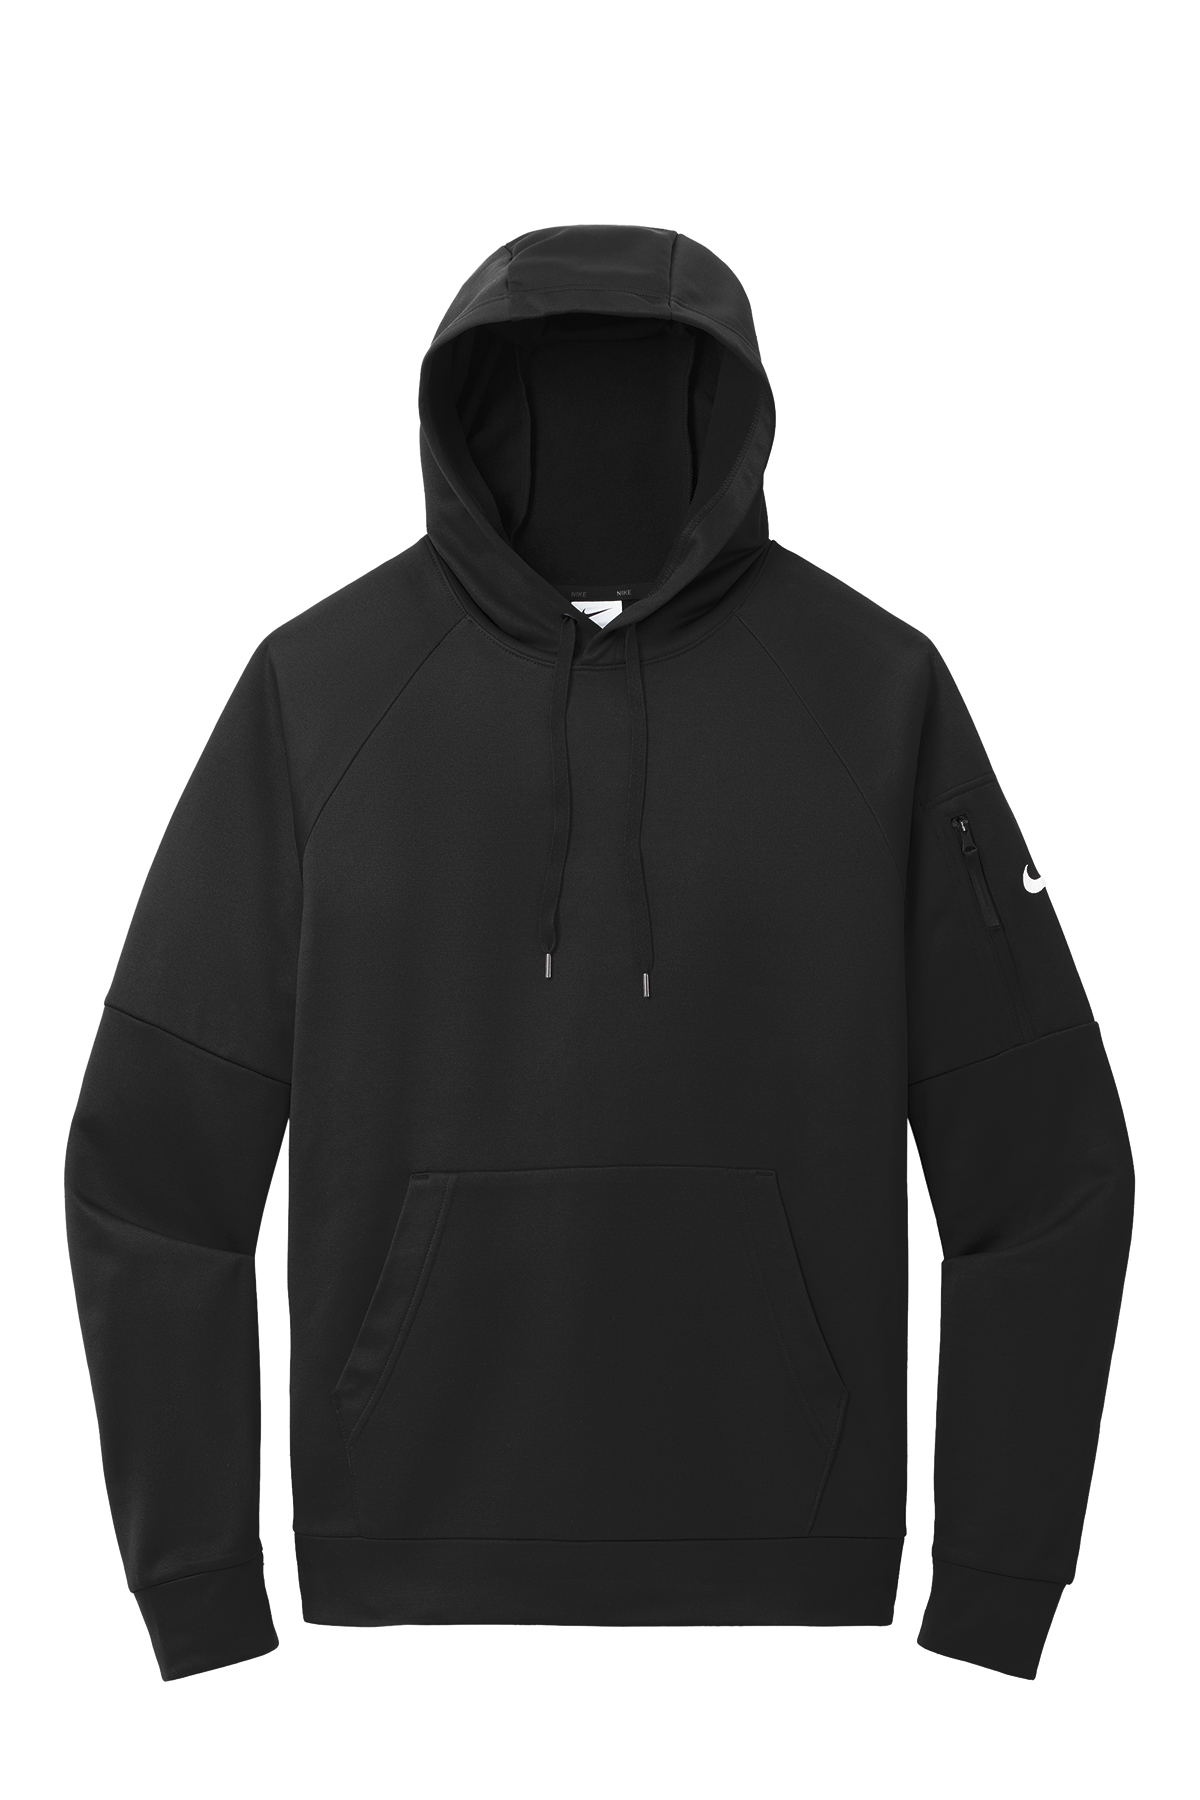 Nike Therma-FIT Pocket Pullover Fleece Hoodie | Product | SanMar